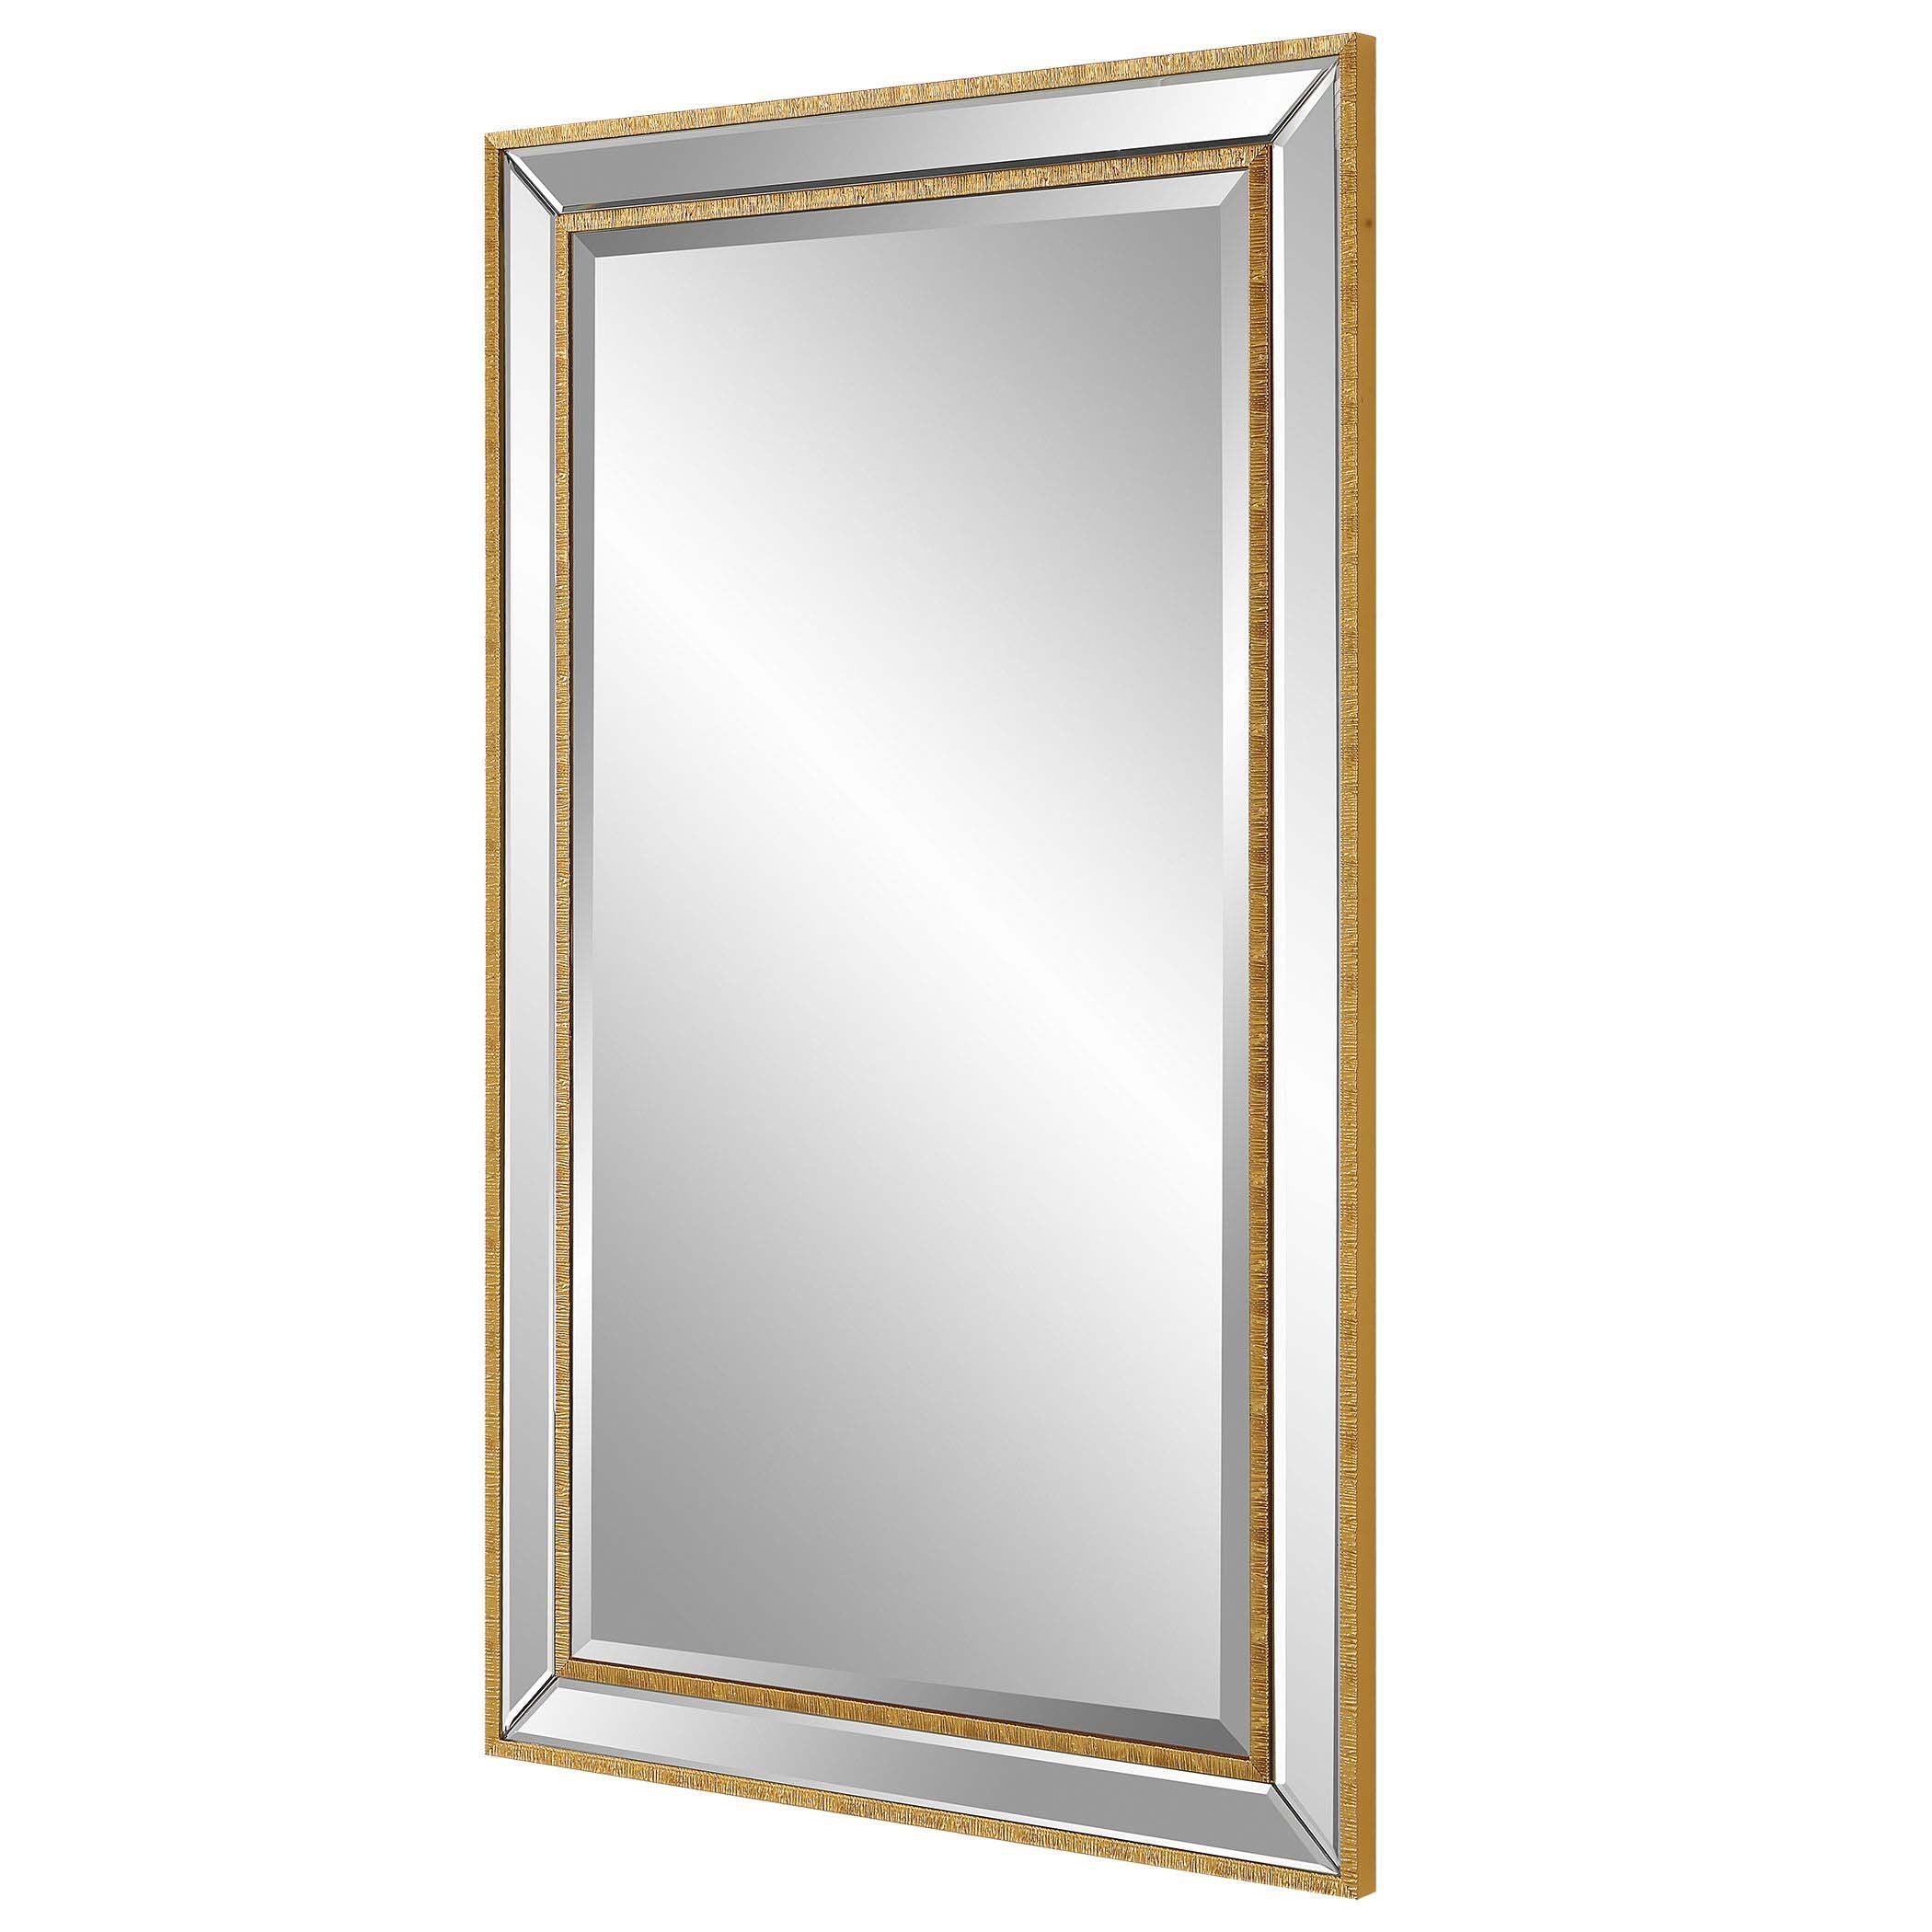 Decor Market Mirror - Gold